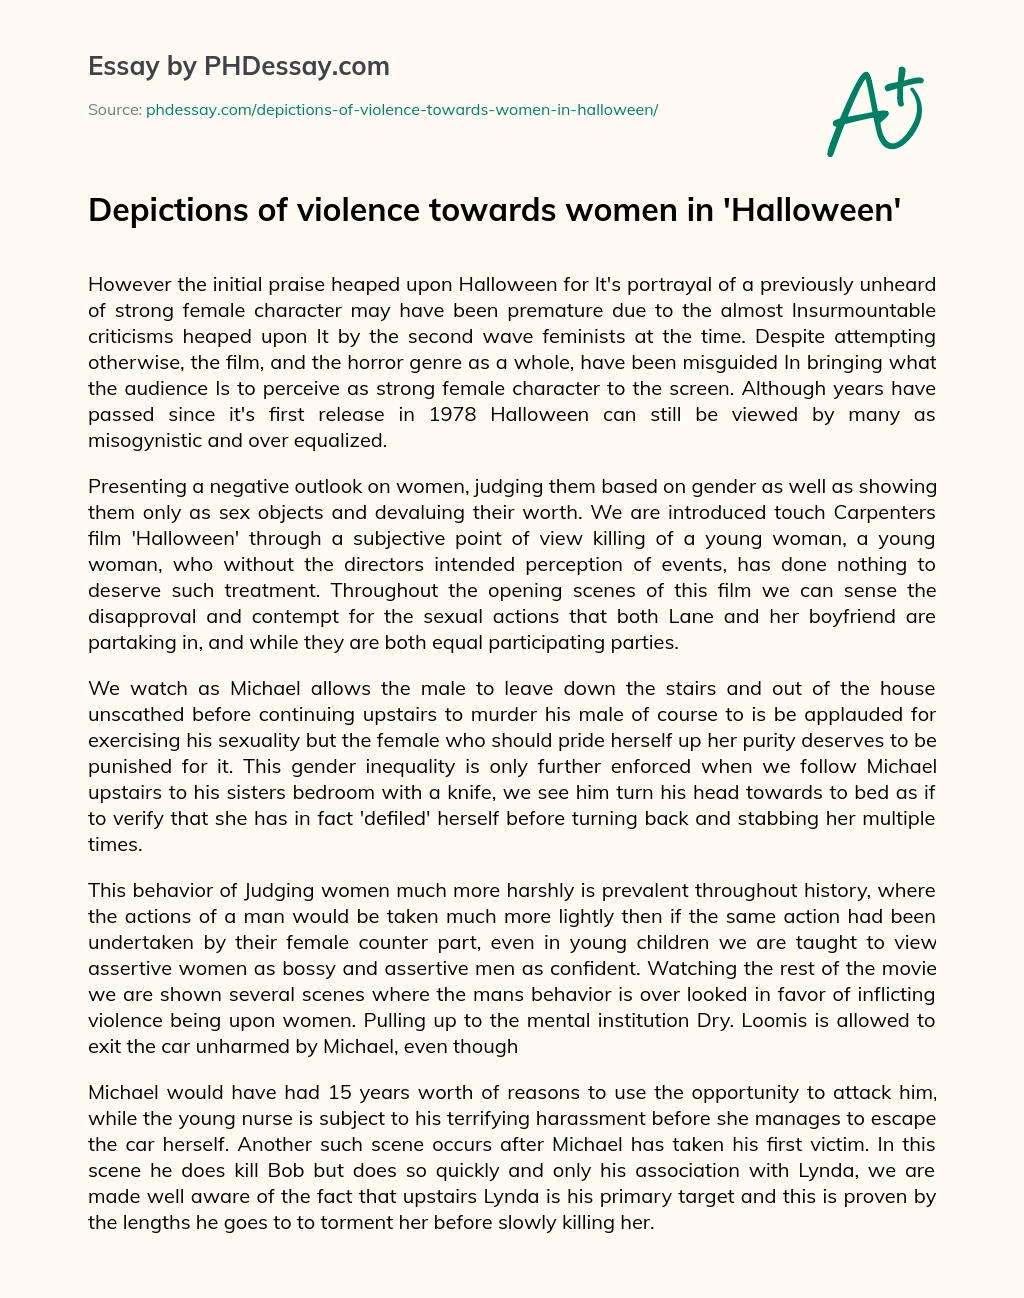 Depictions of violence towards women in ‘Halloween’ essay